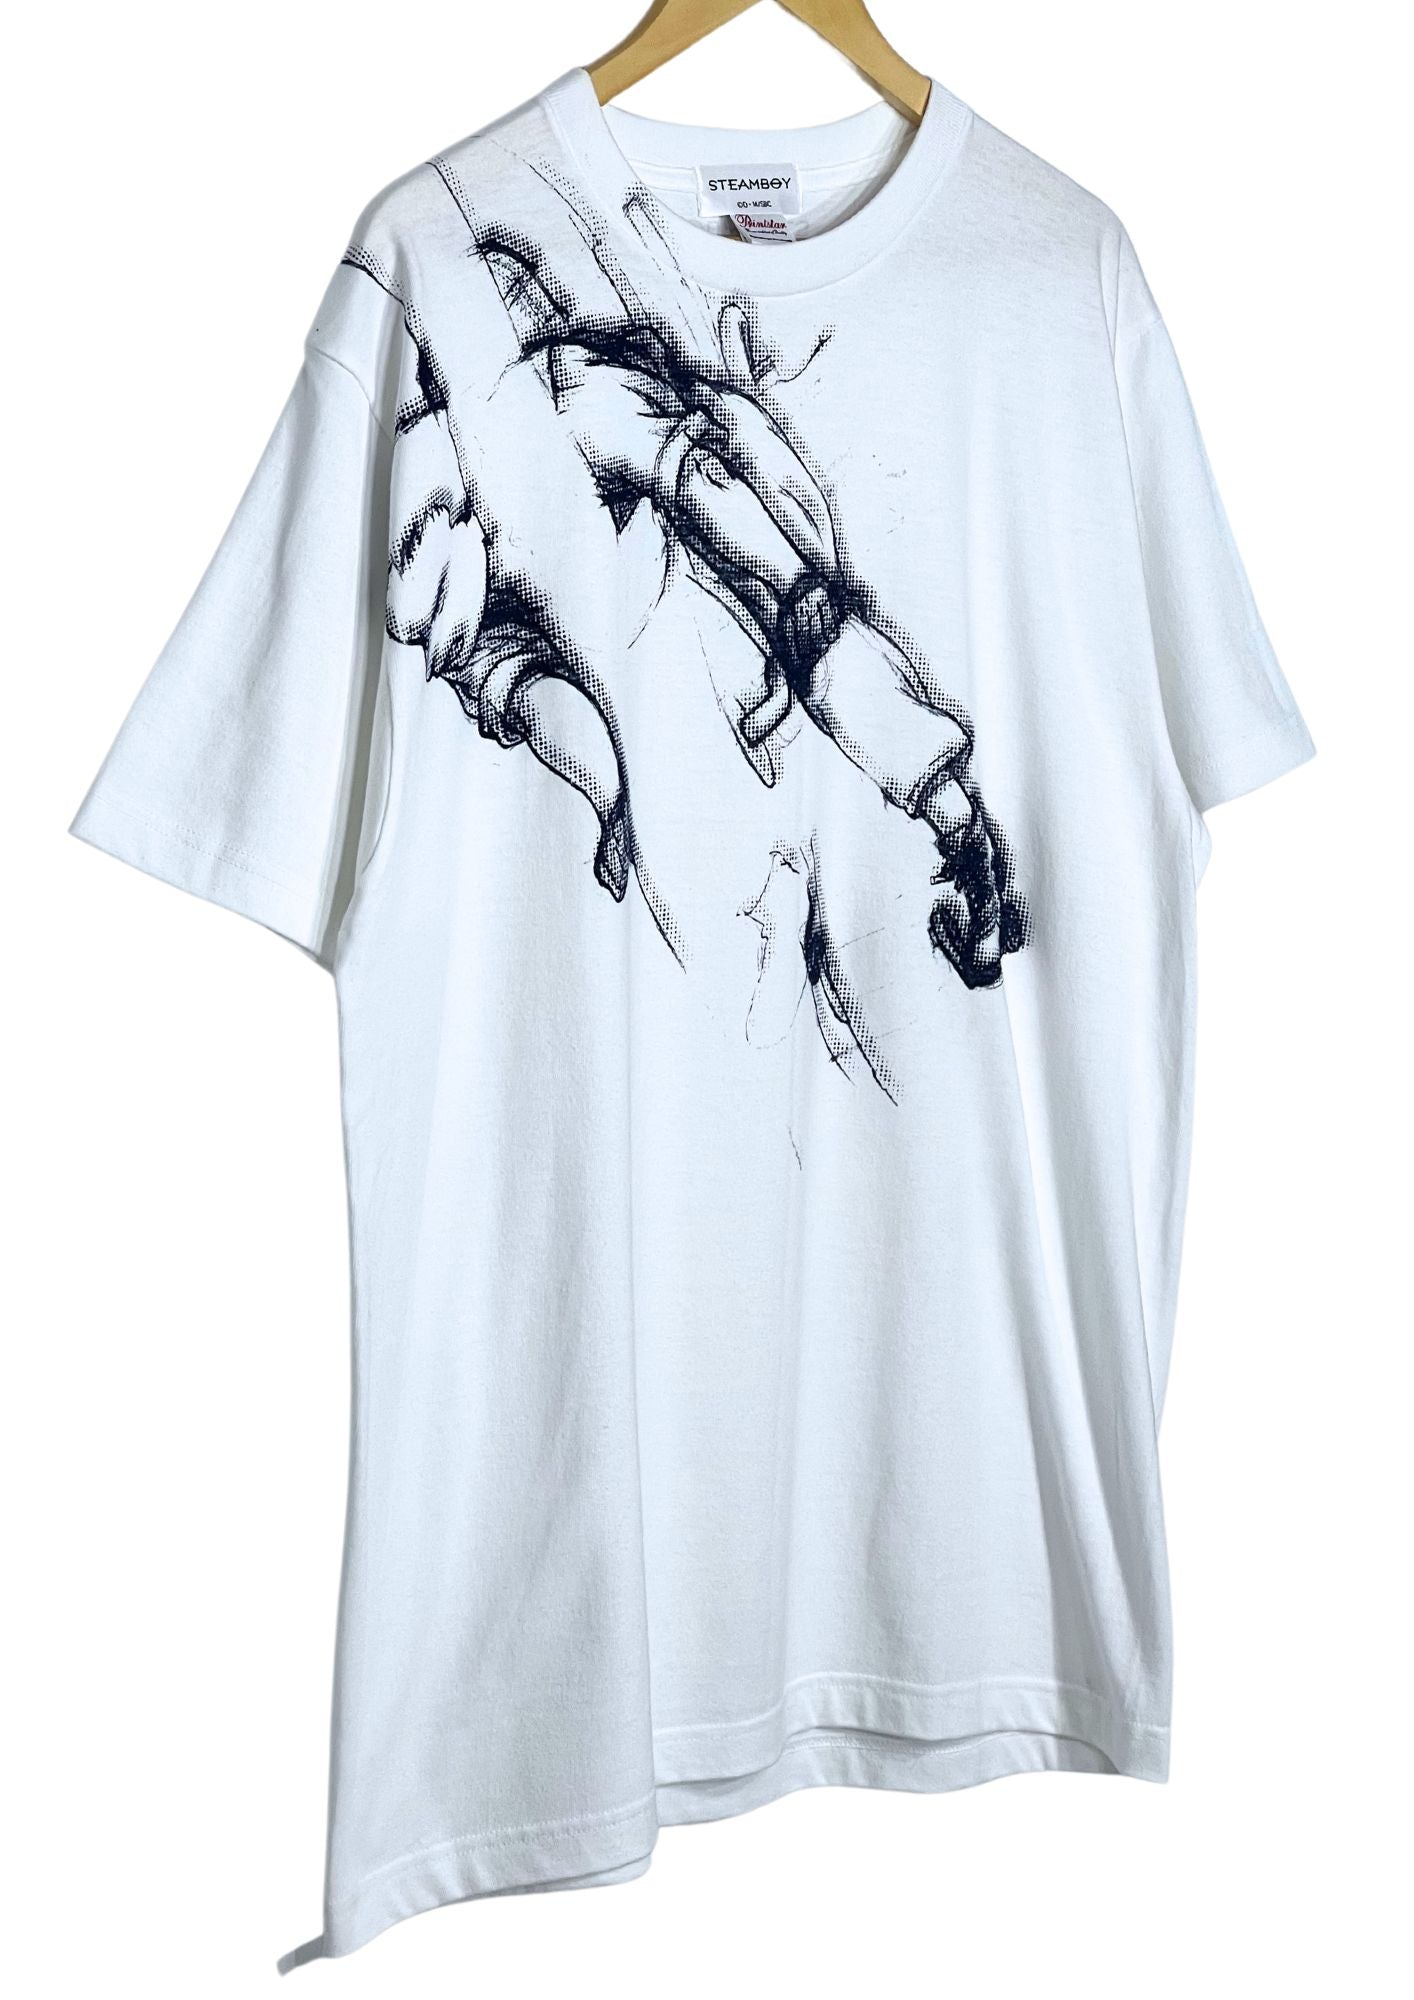 2004 Steamboy Katsuhiro Otomo x Steamboy Official Movie Promotion T-shirt